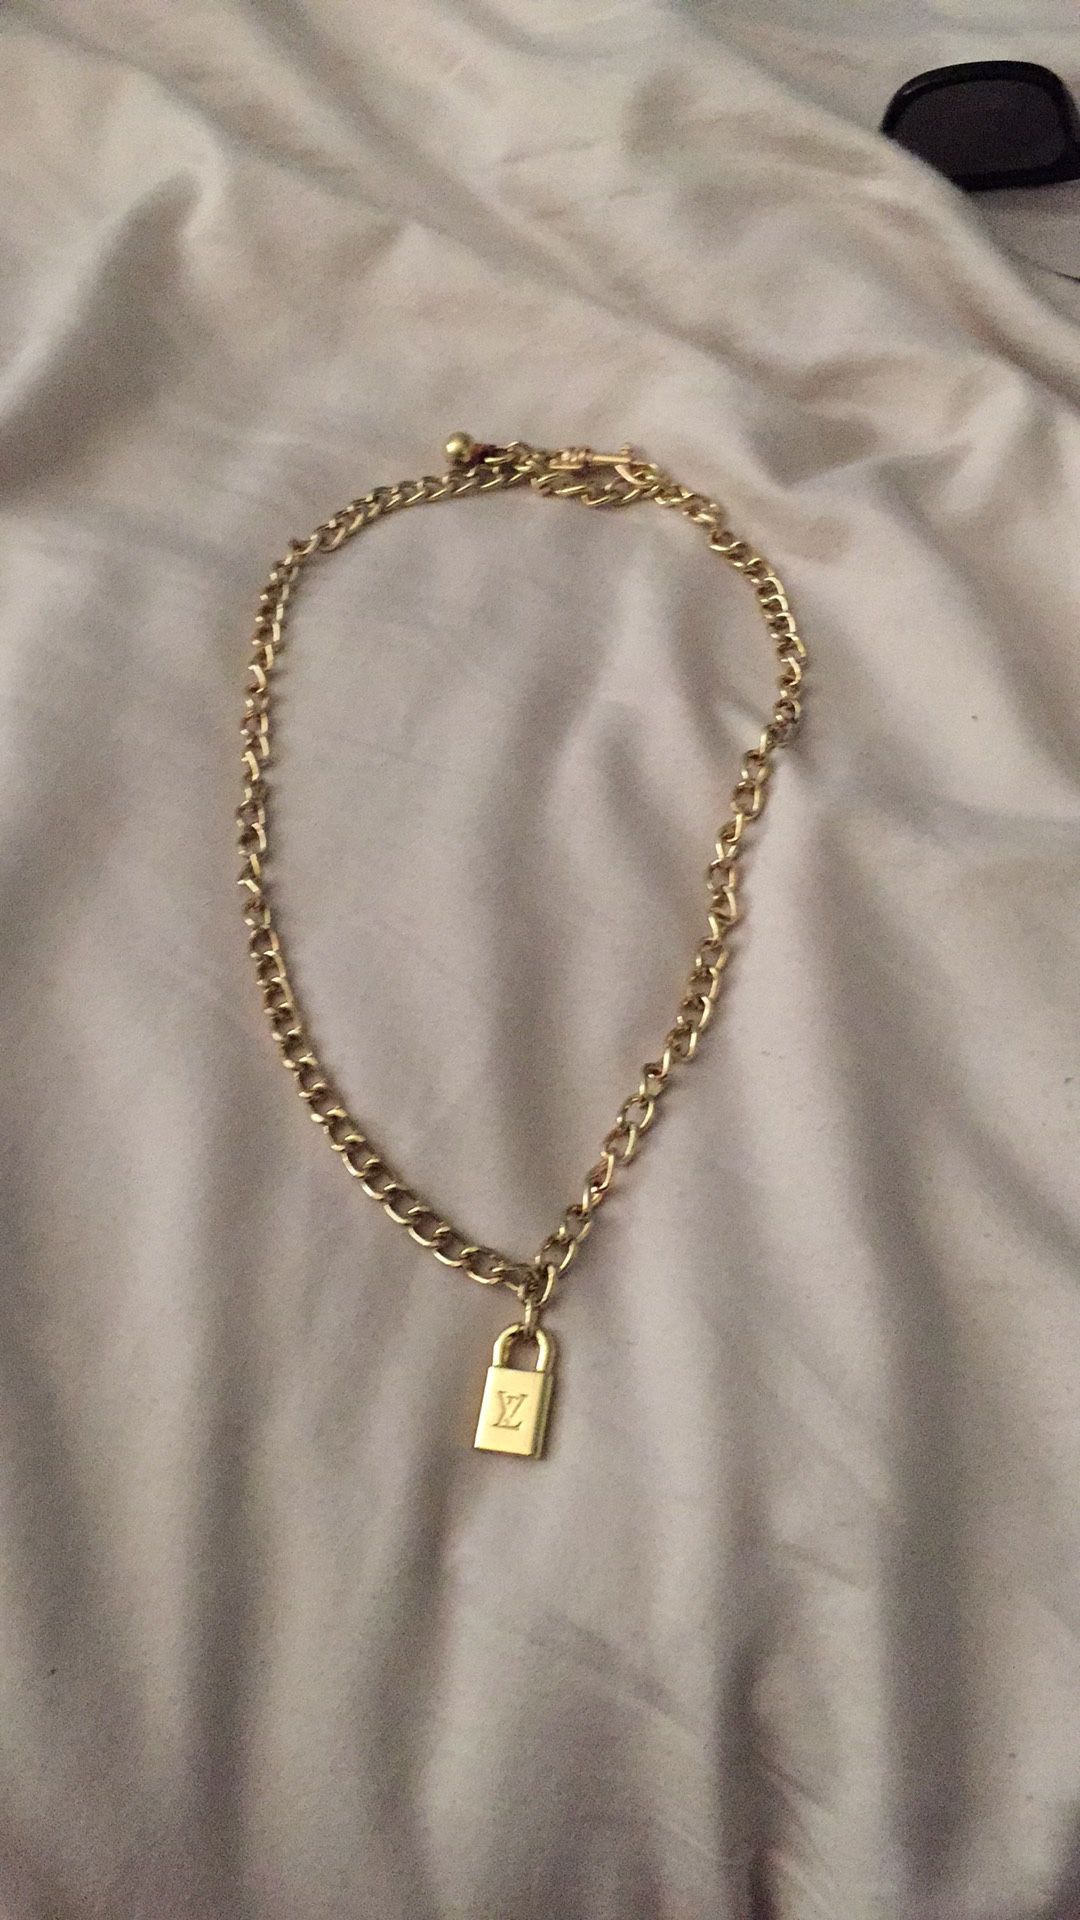 Louis Vuitton necklace for Sale in Glendale, AZ - OfferUp